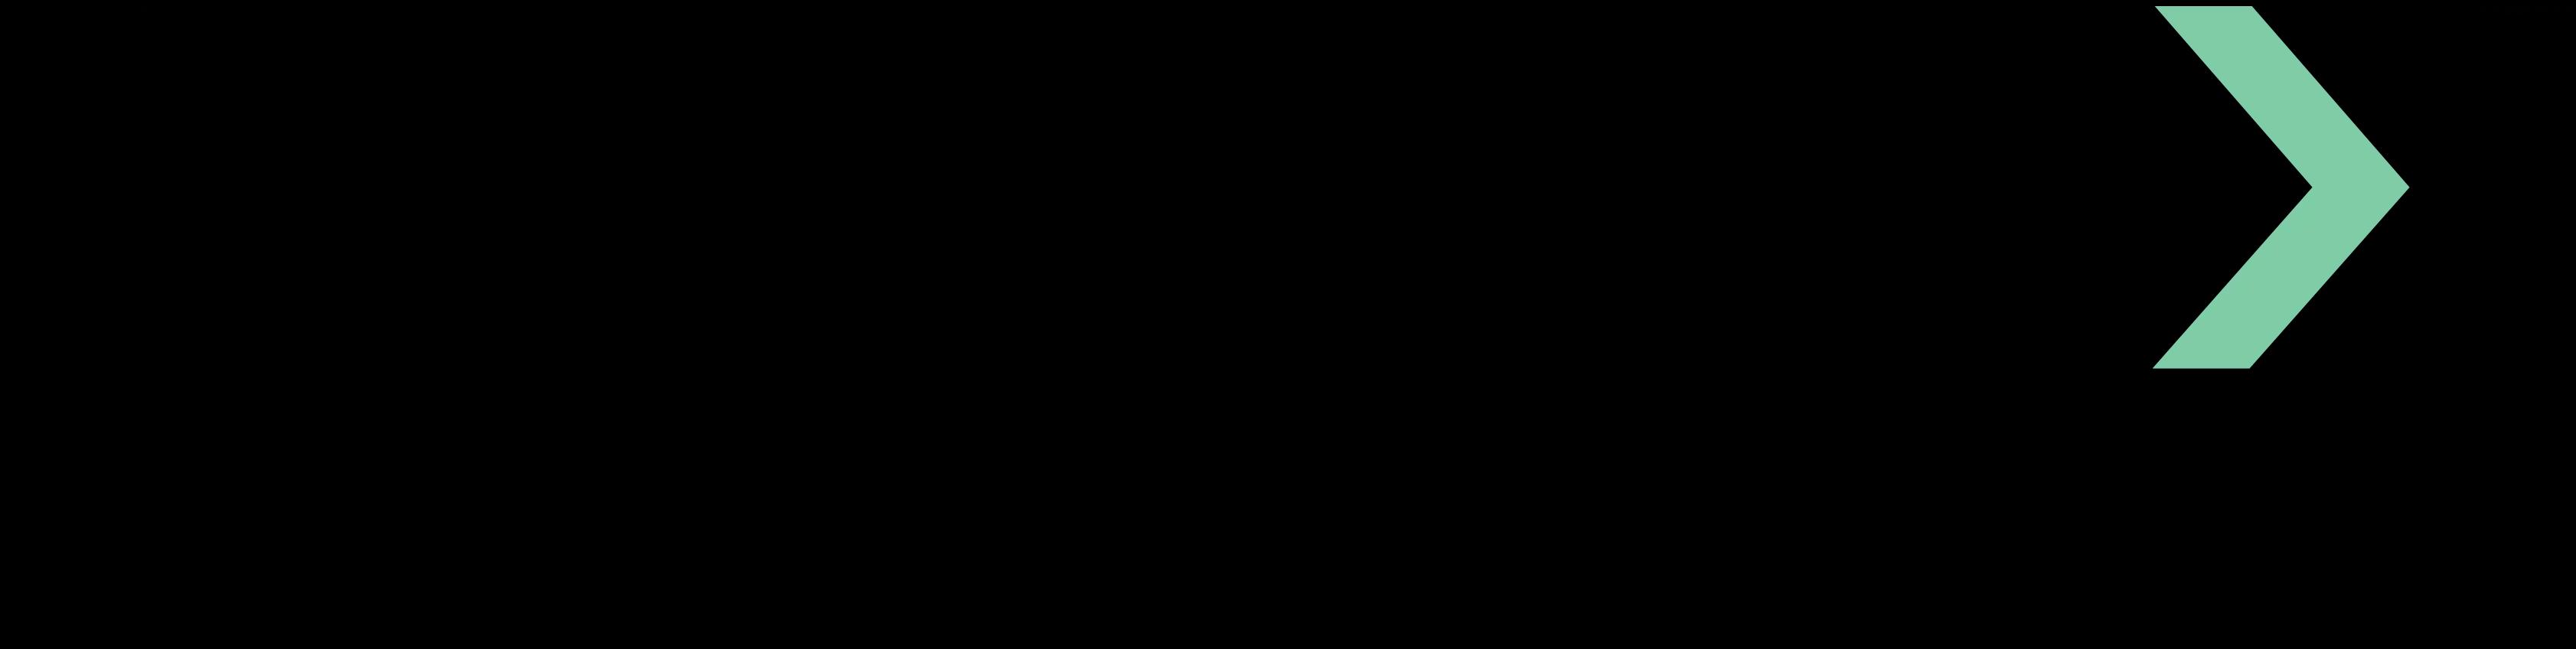 Geniox logo